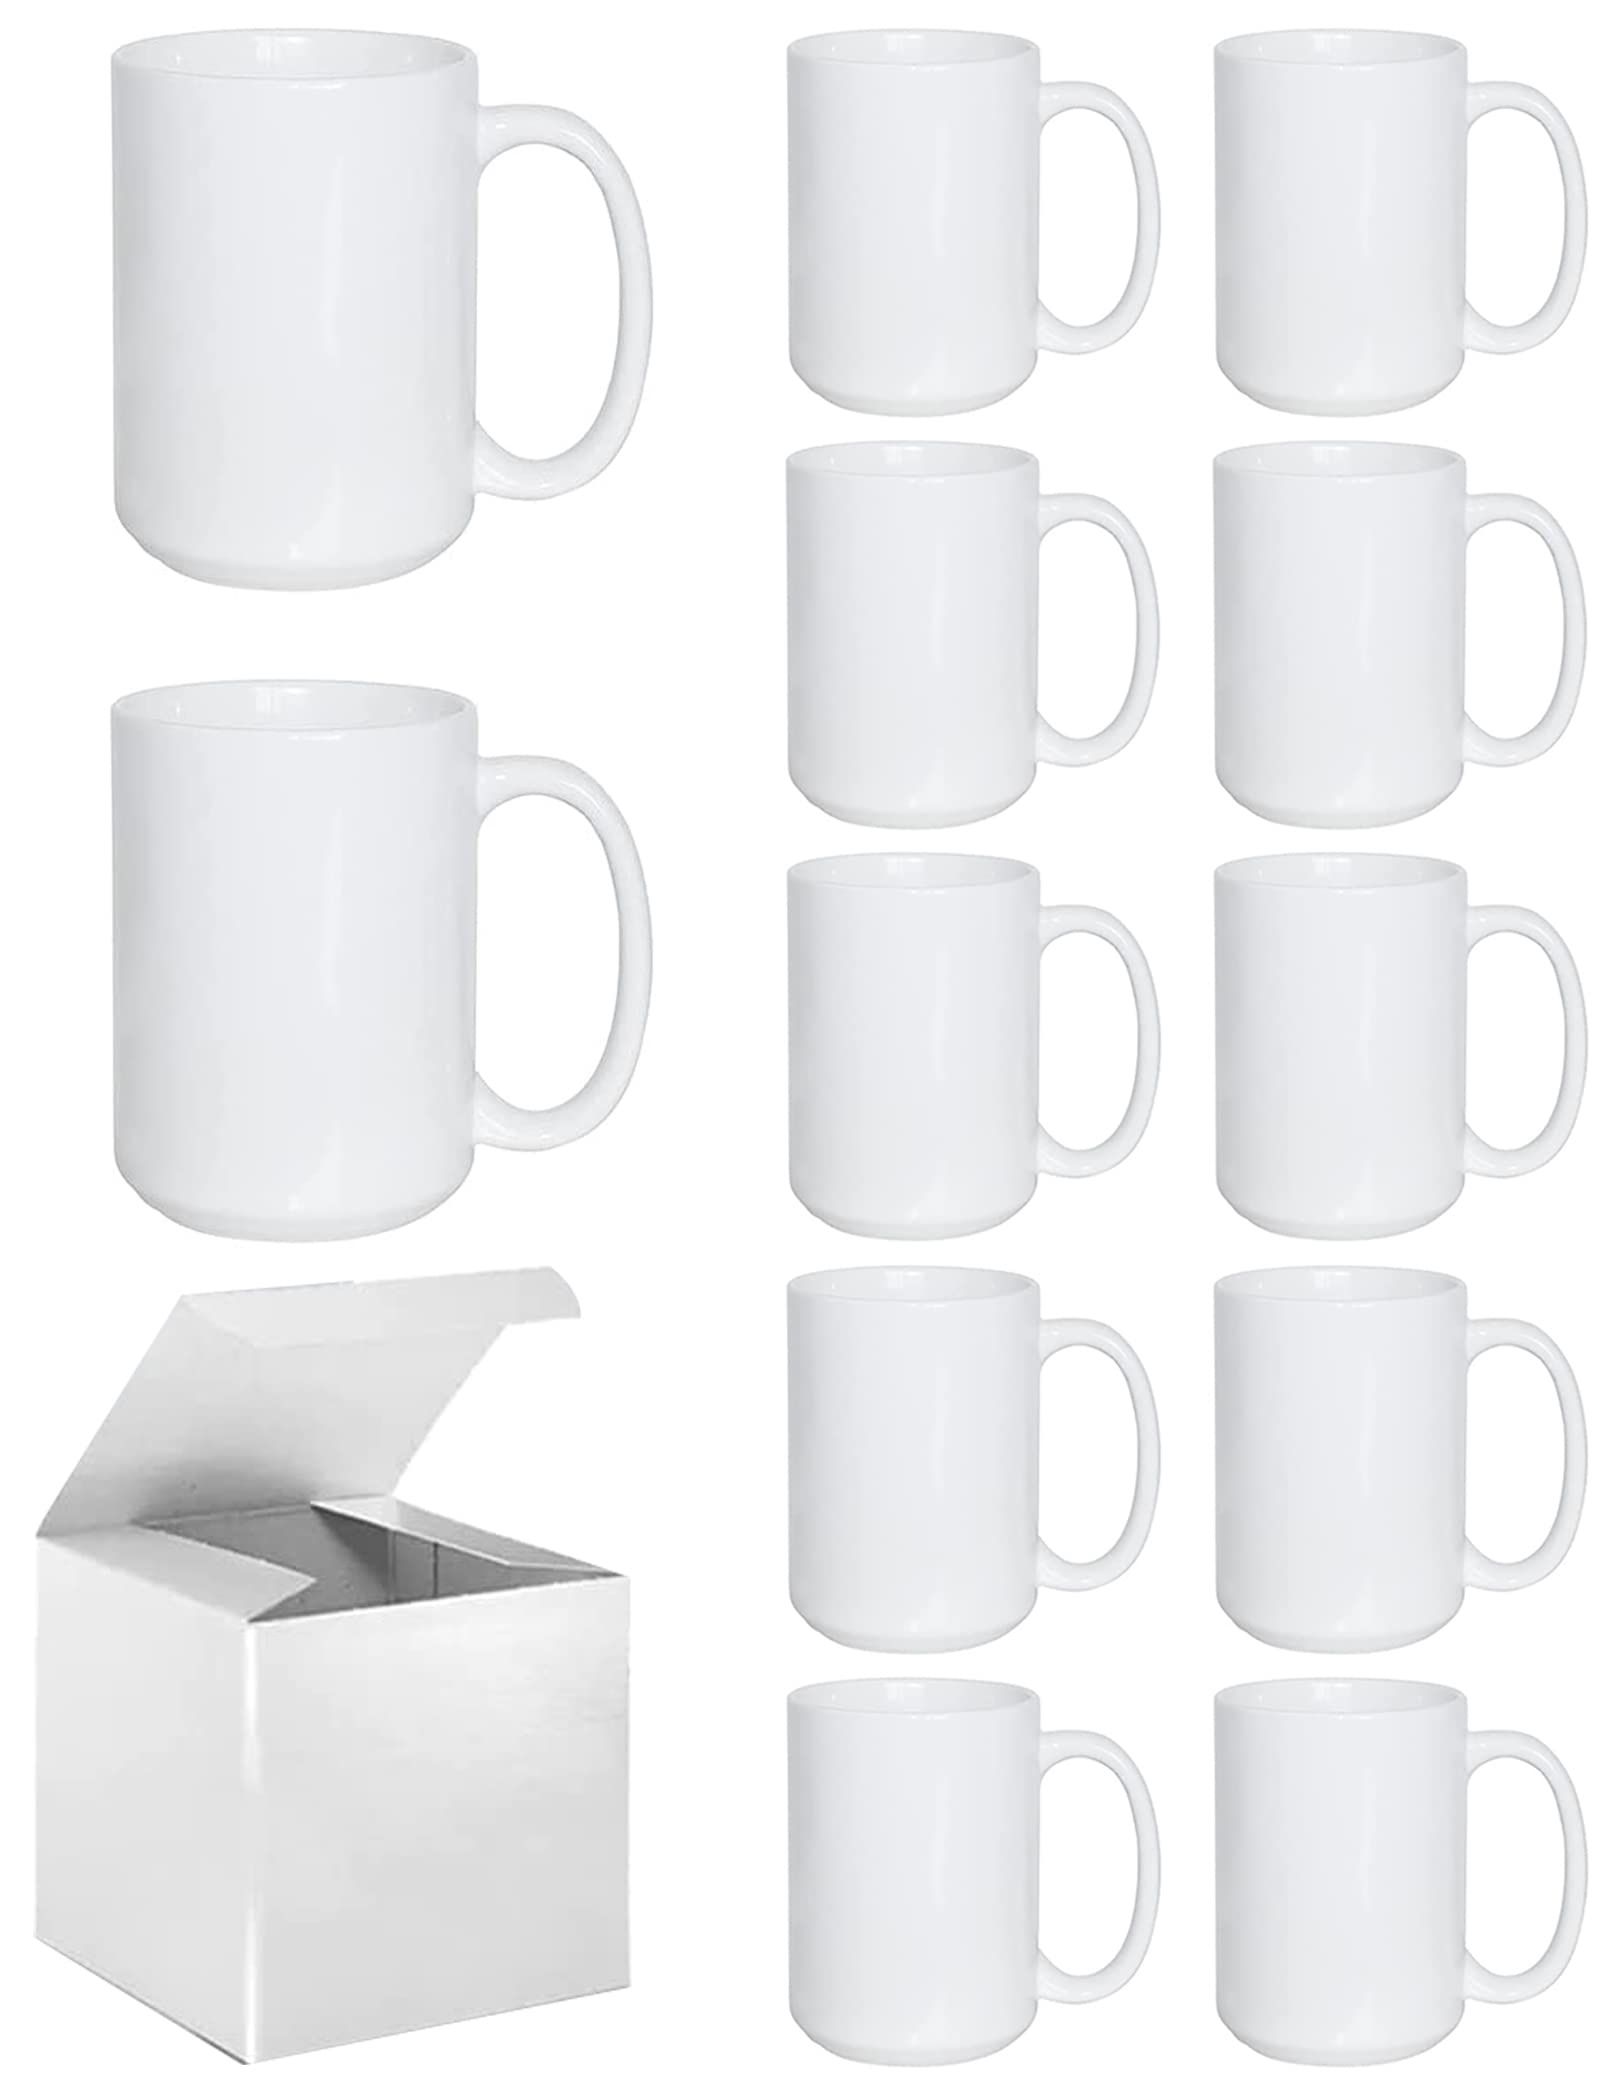 ABBSH Sublimation Coffee Mugs, Sublimation Mugs 15 Oz White Coffee Mugs Tazas Para Sublimacion Sublimation Cups With Box For Coffee, Soup, Tea, Milk, 